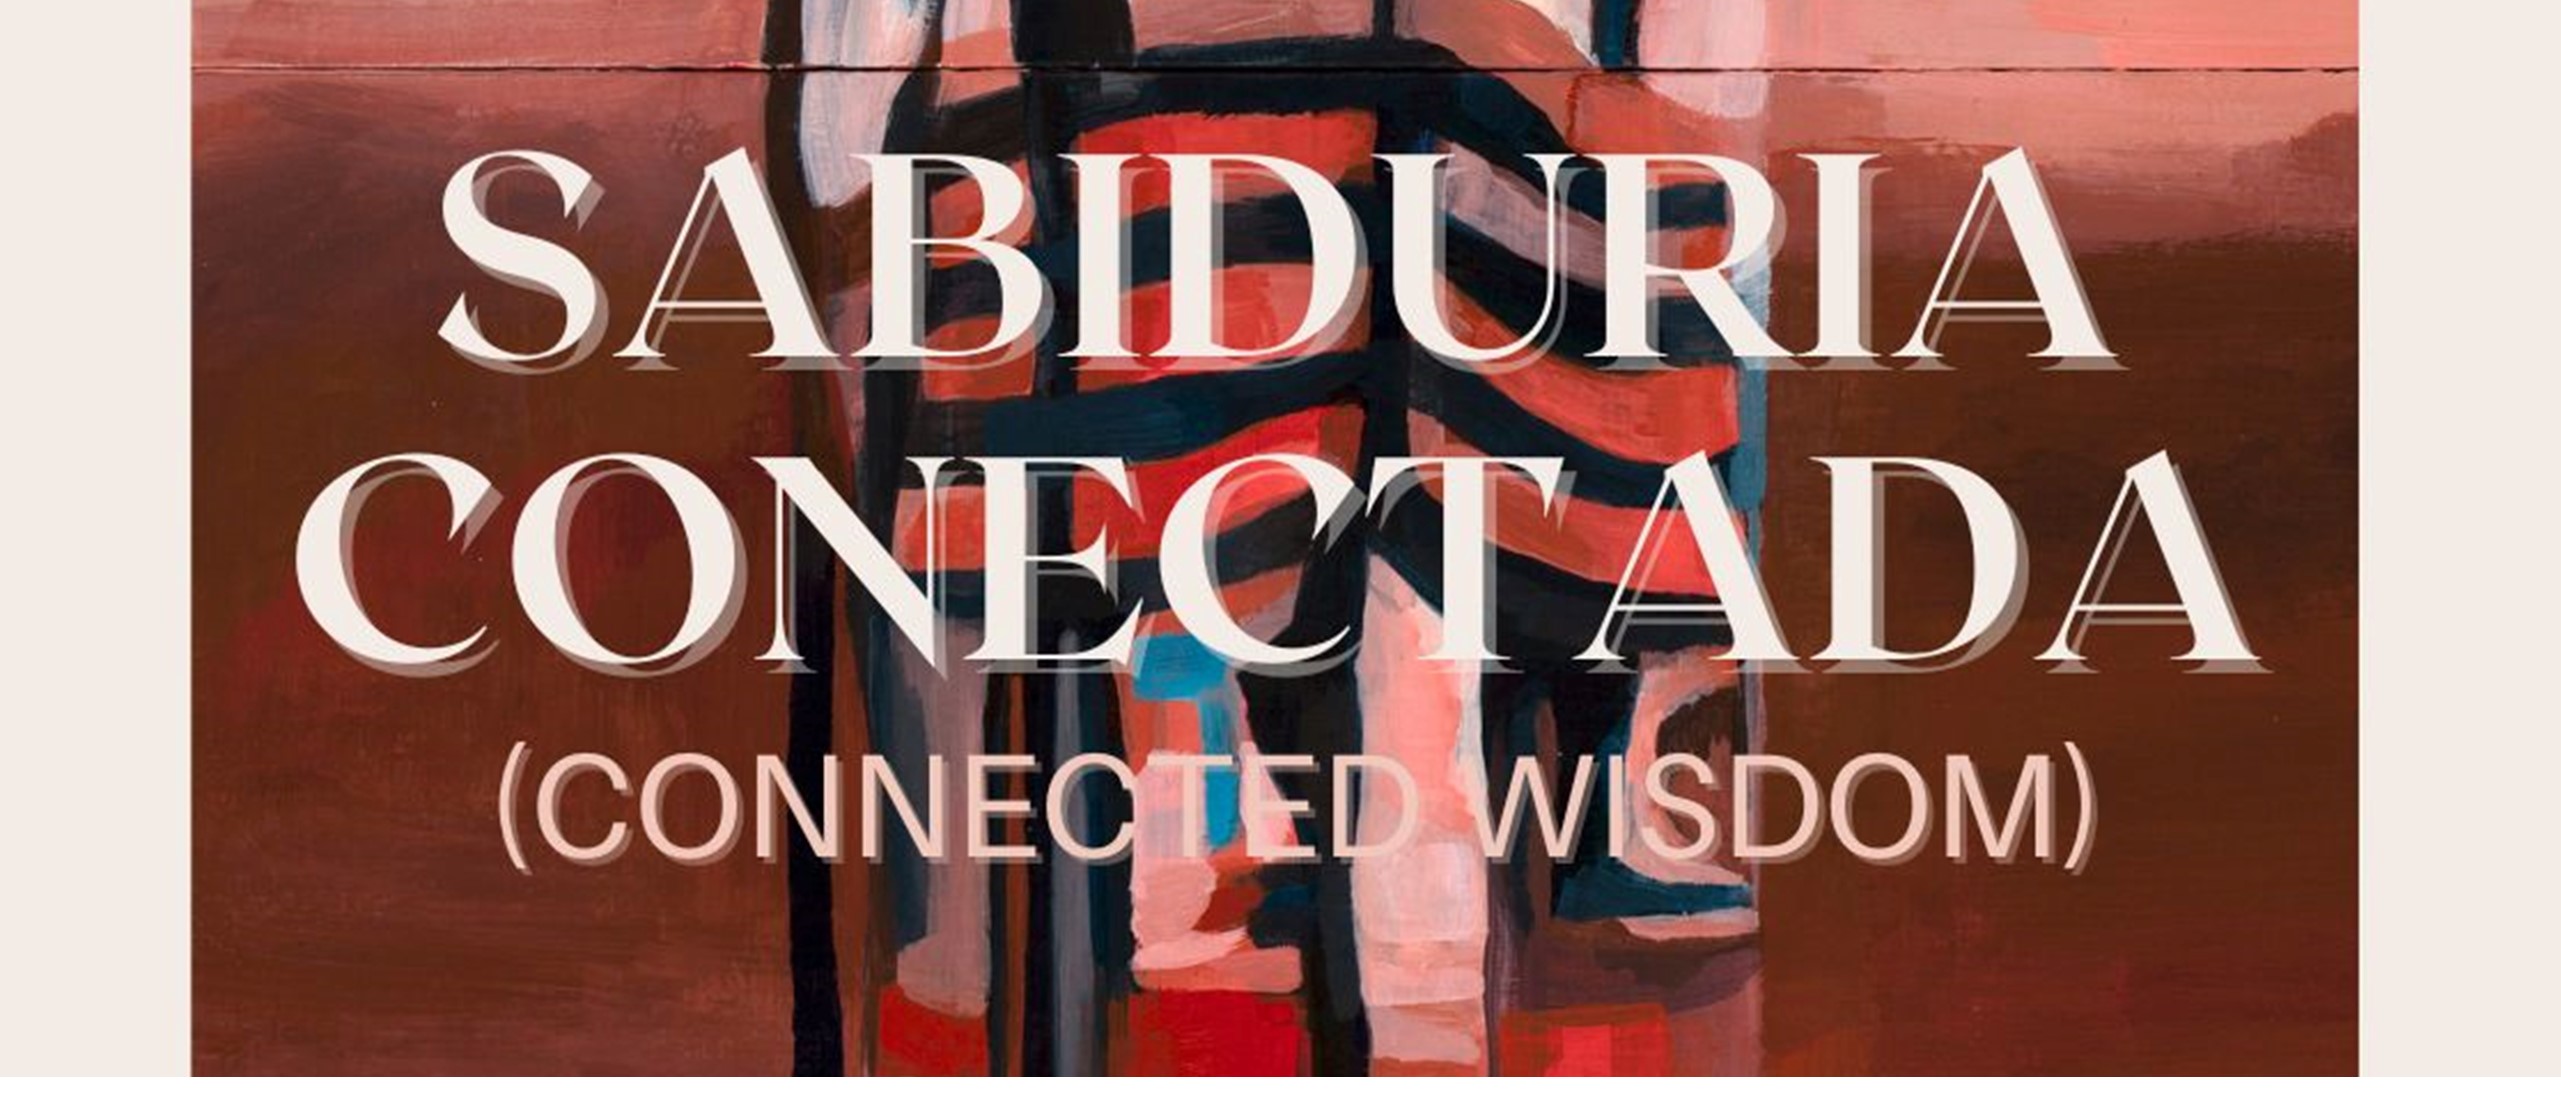 Sabiduria Conectada (Connected Wisdom)